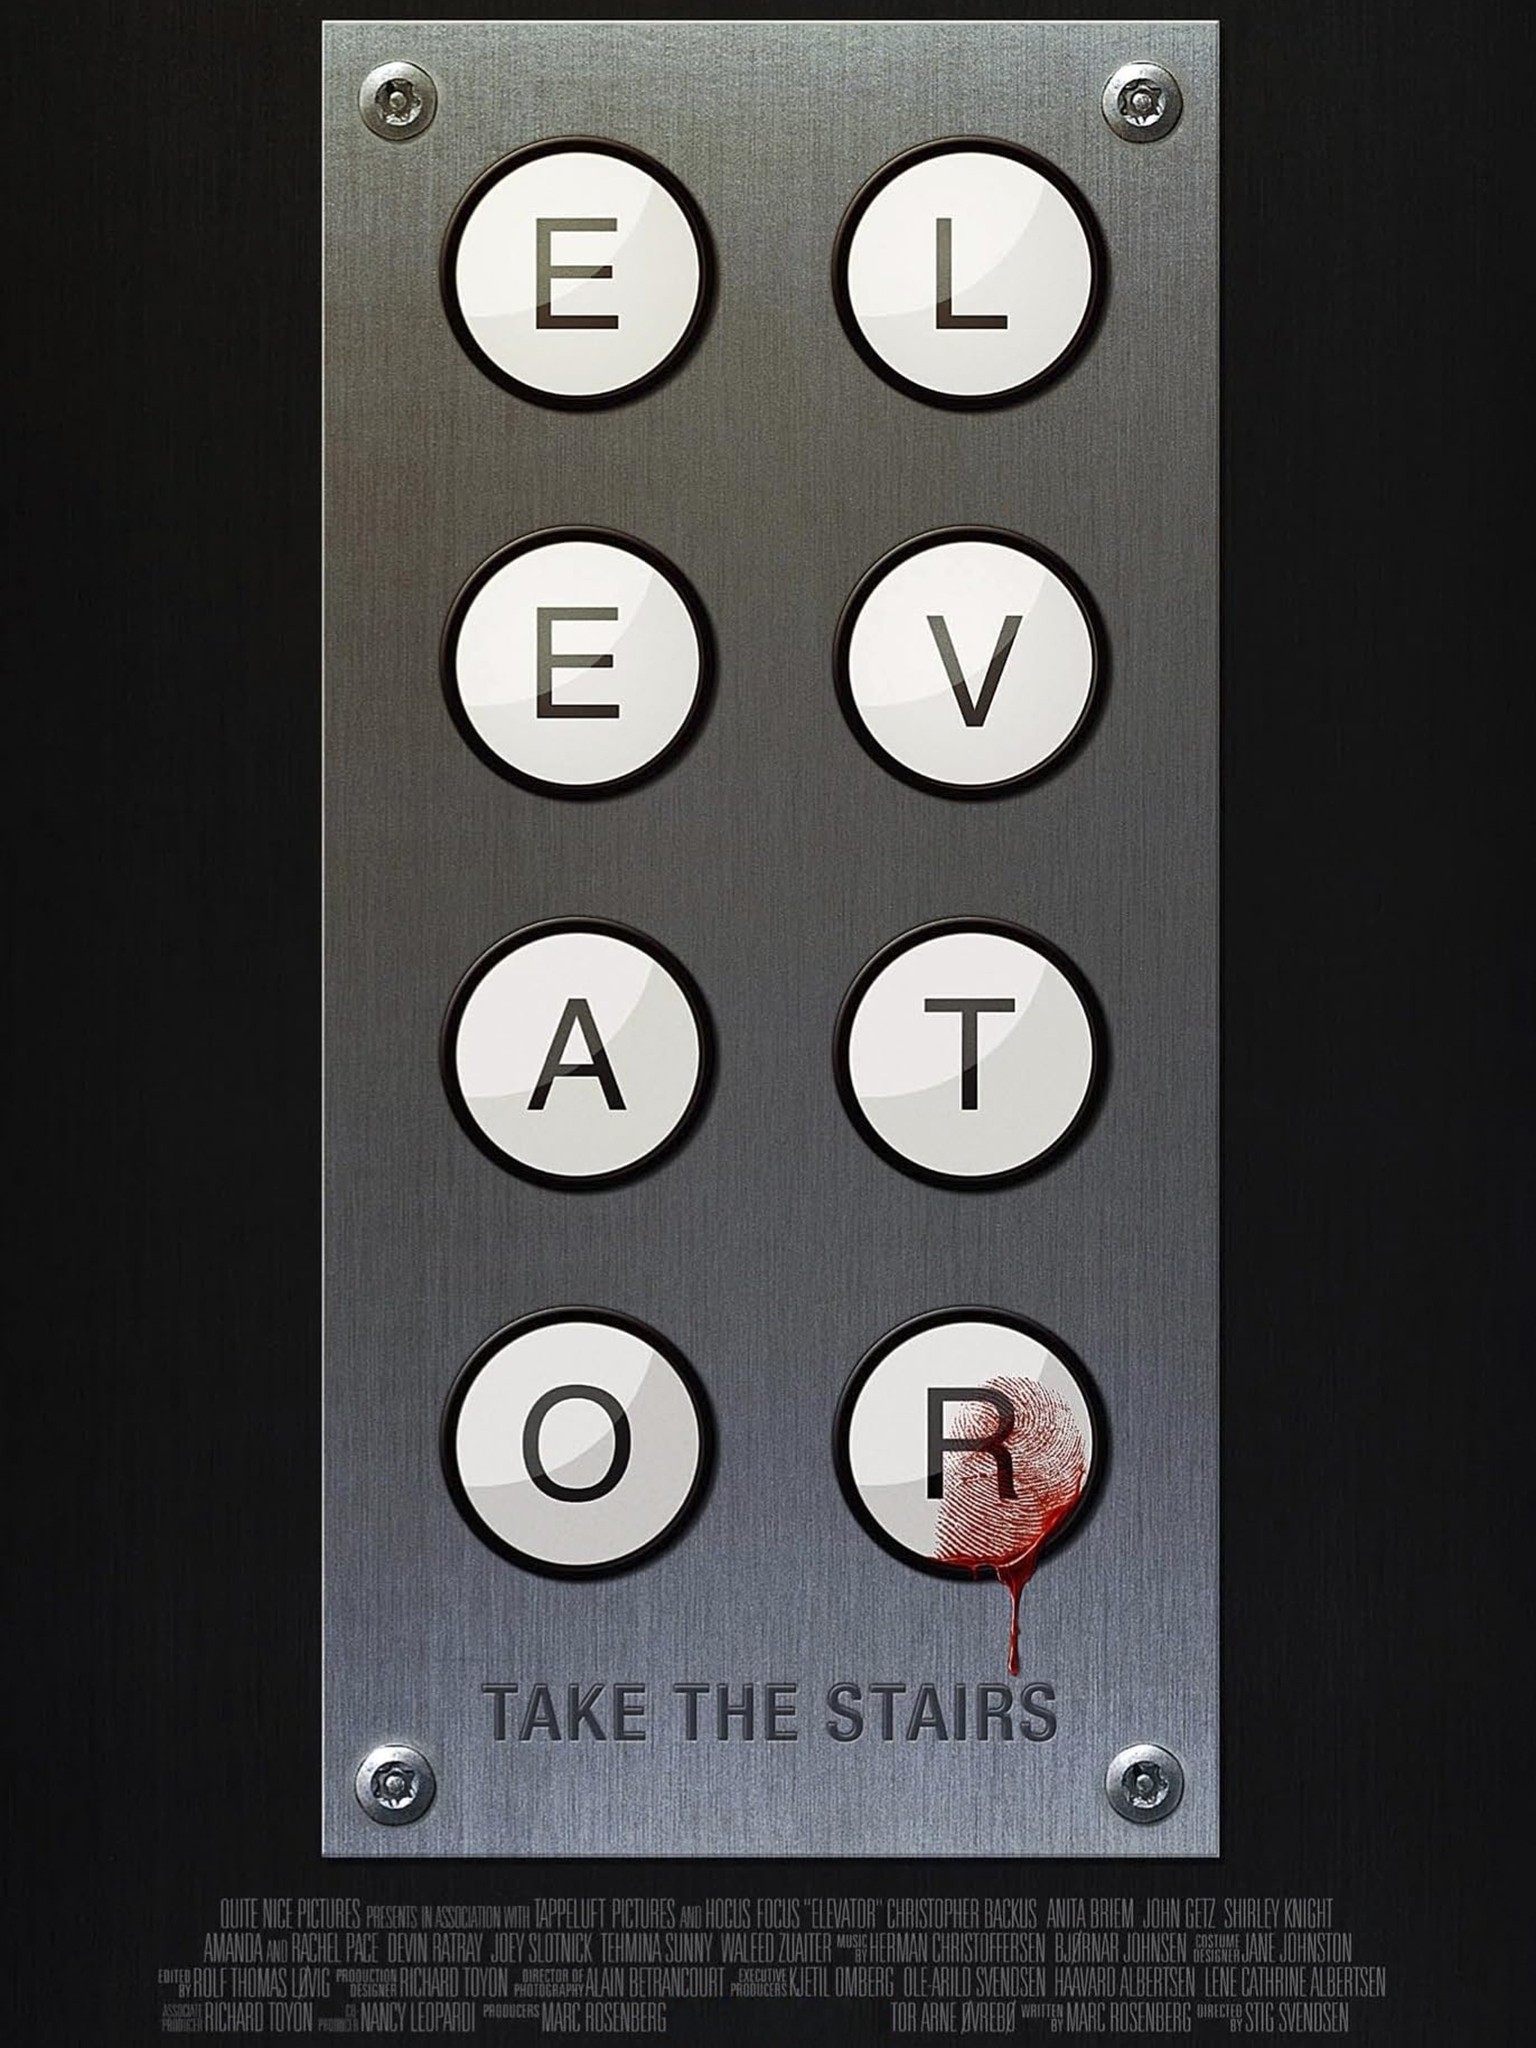 david eastman recommends Man Eats Wife Elevator